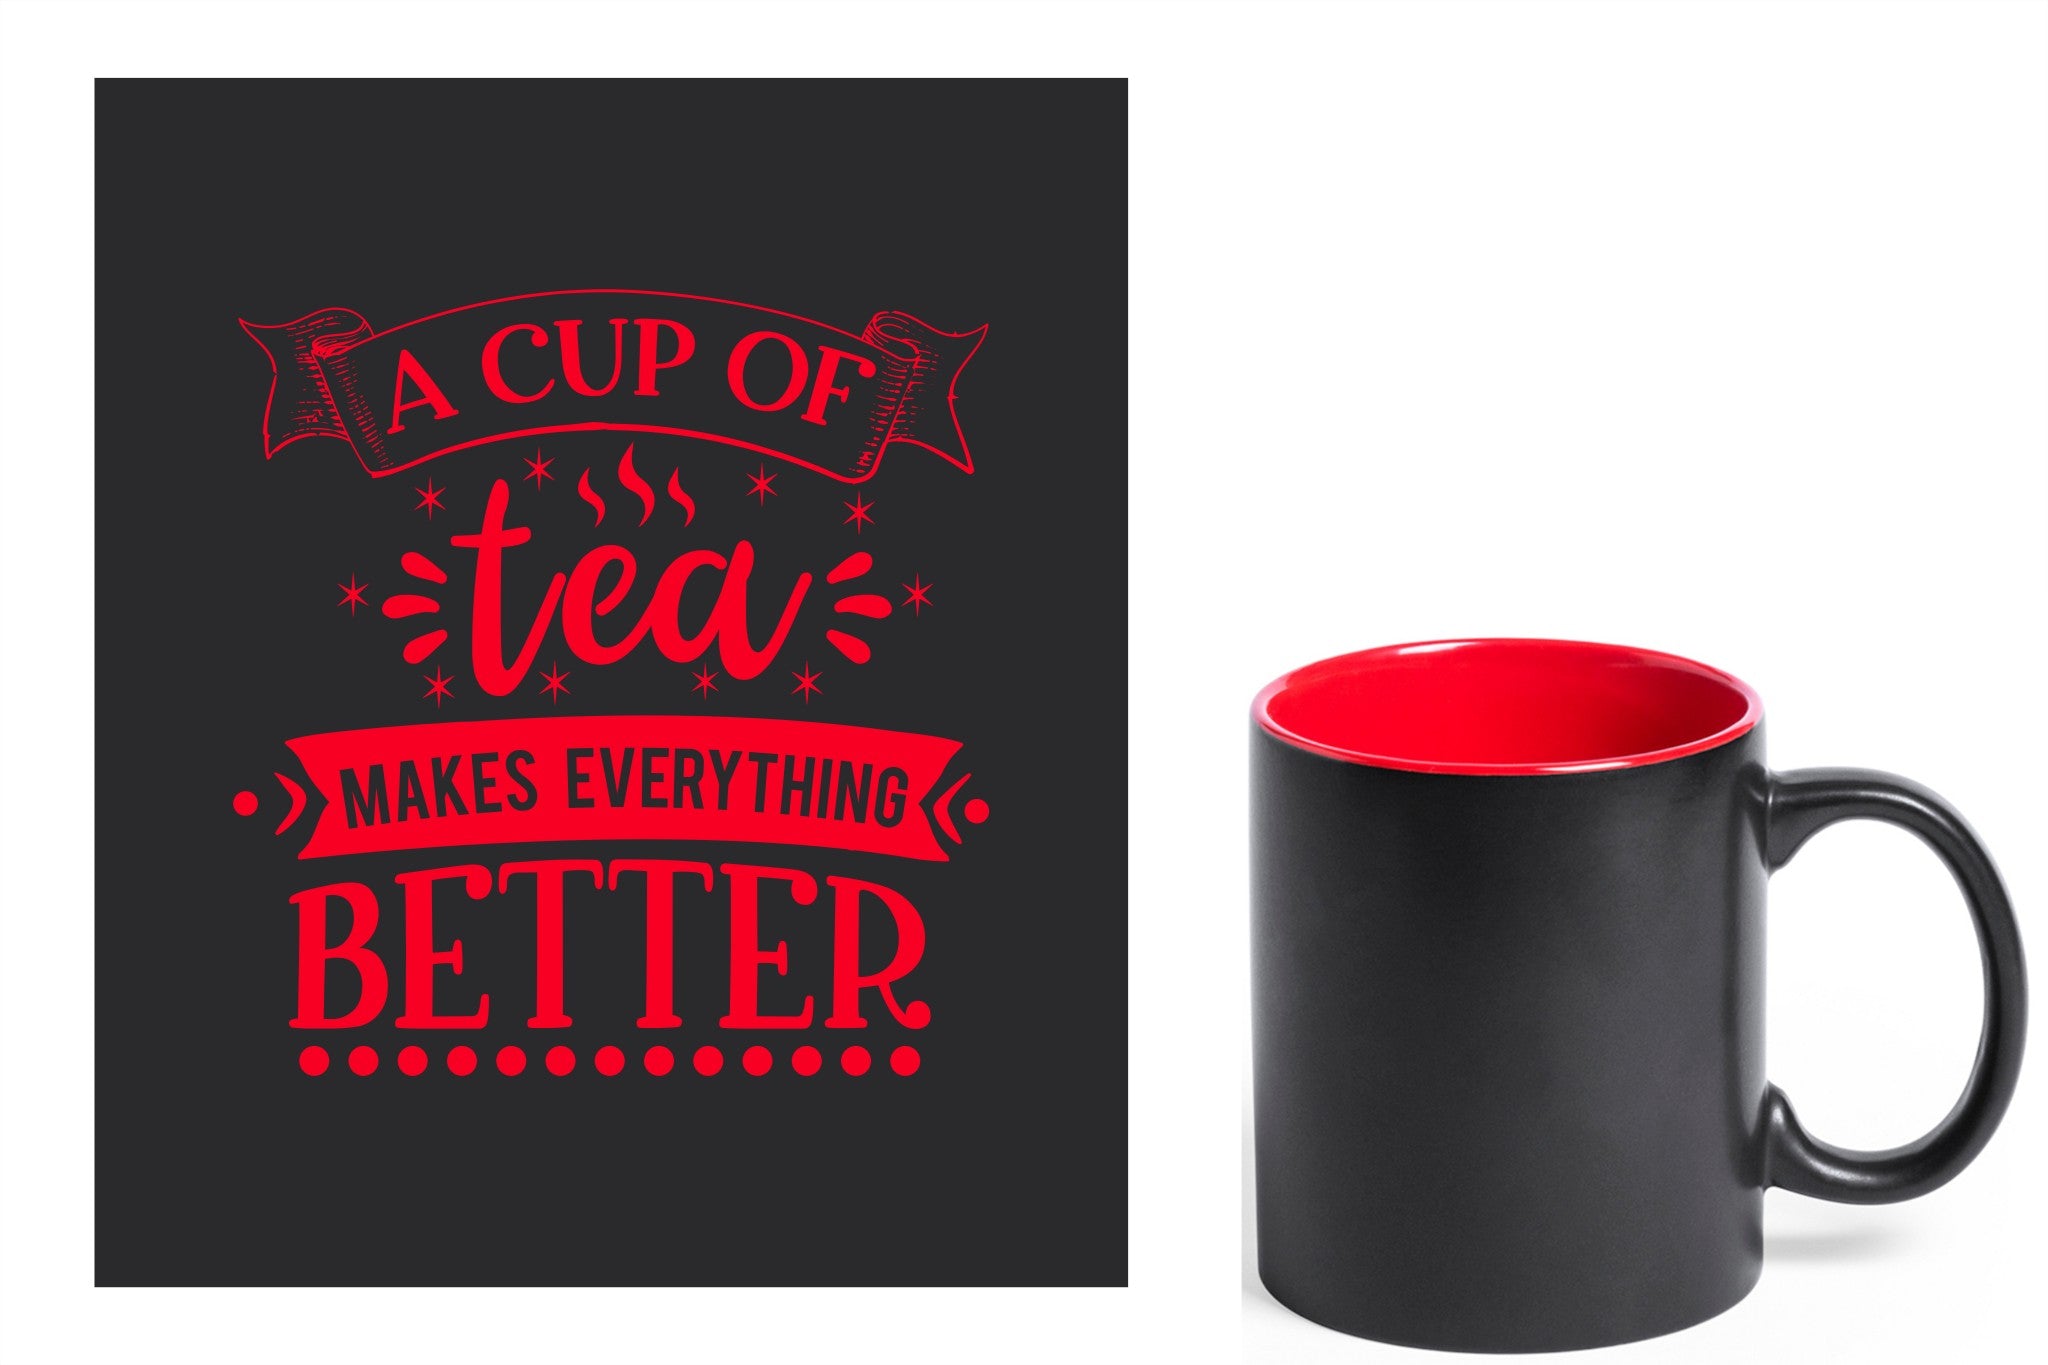 zwarte keramische mok met rode gravure  'A cup of tea makes everything better'.